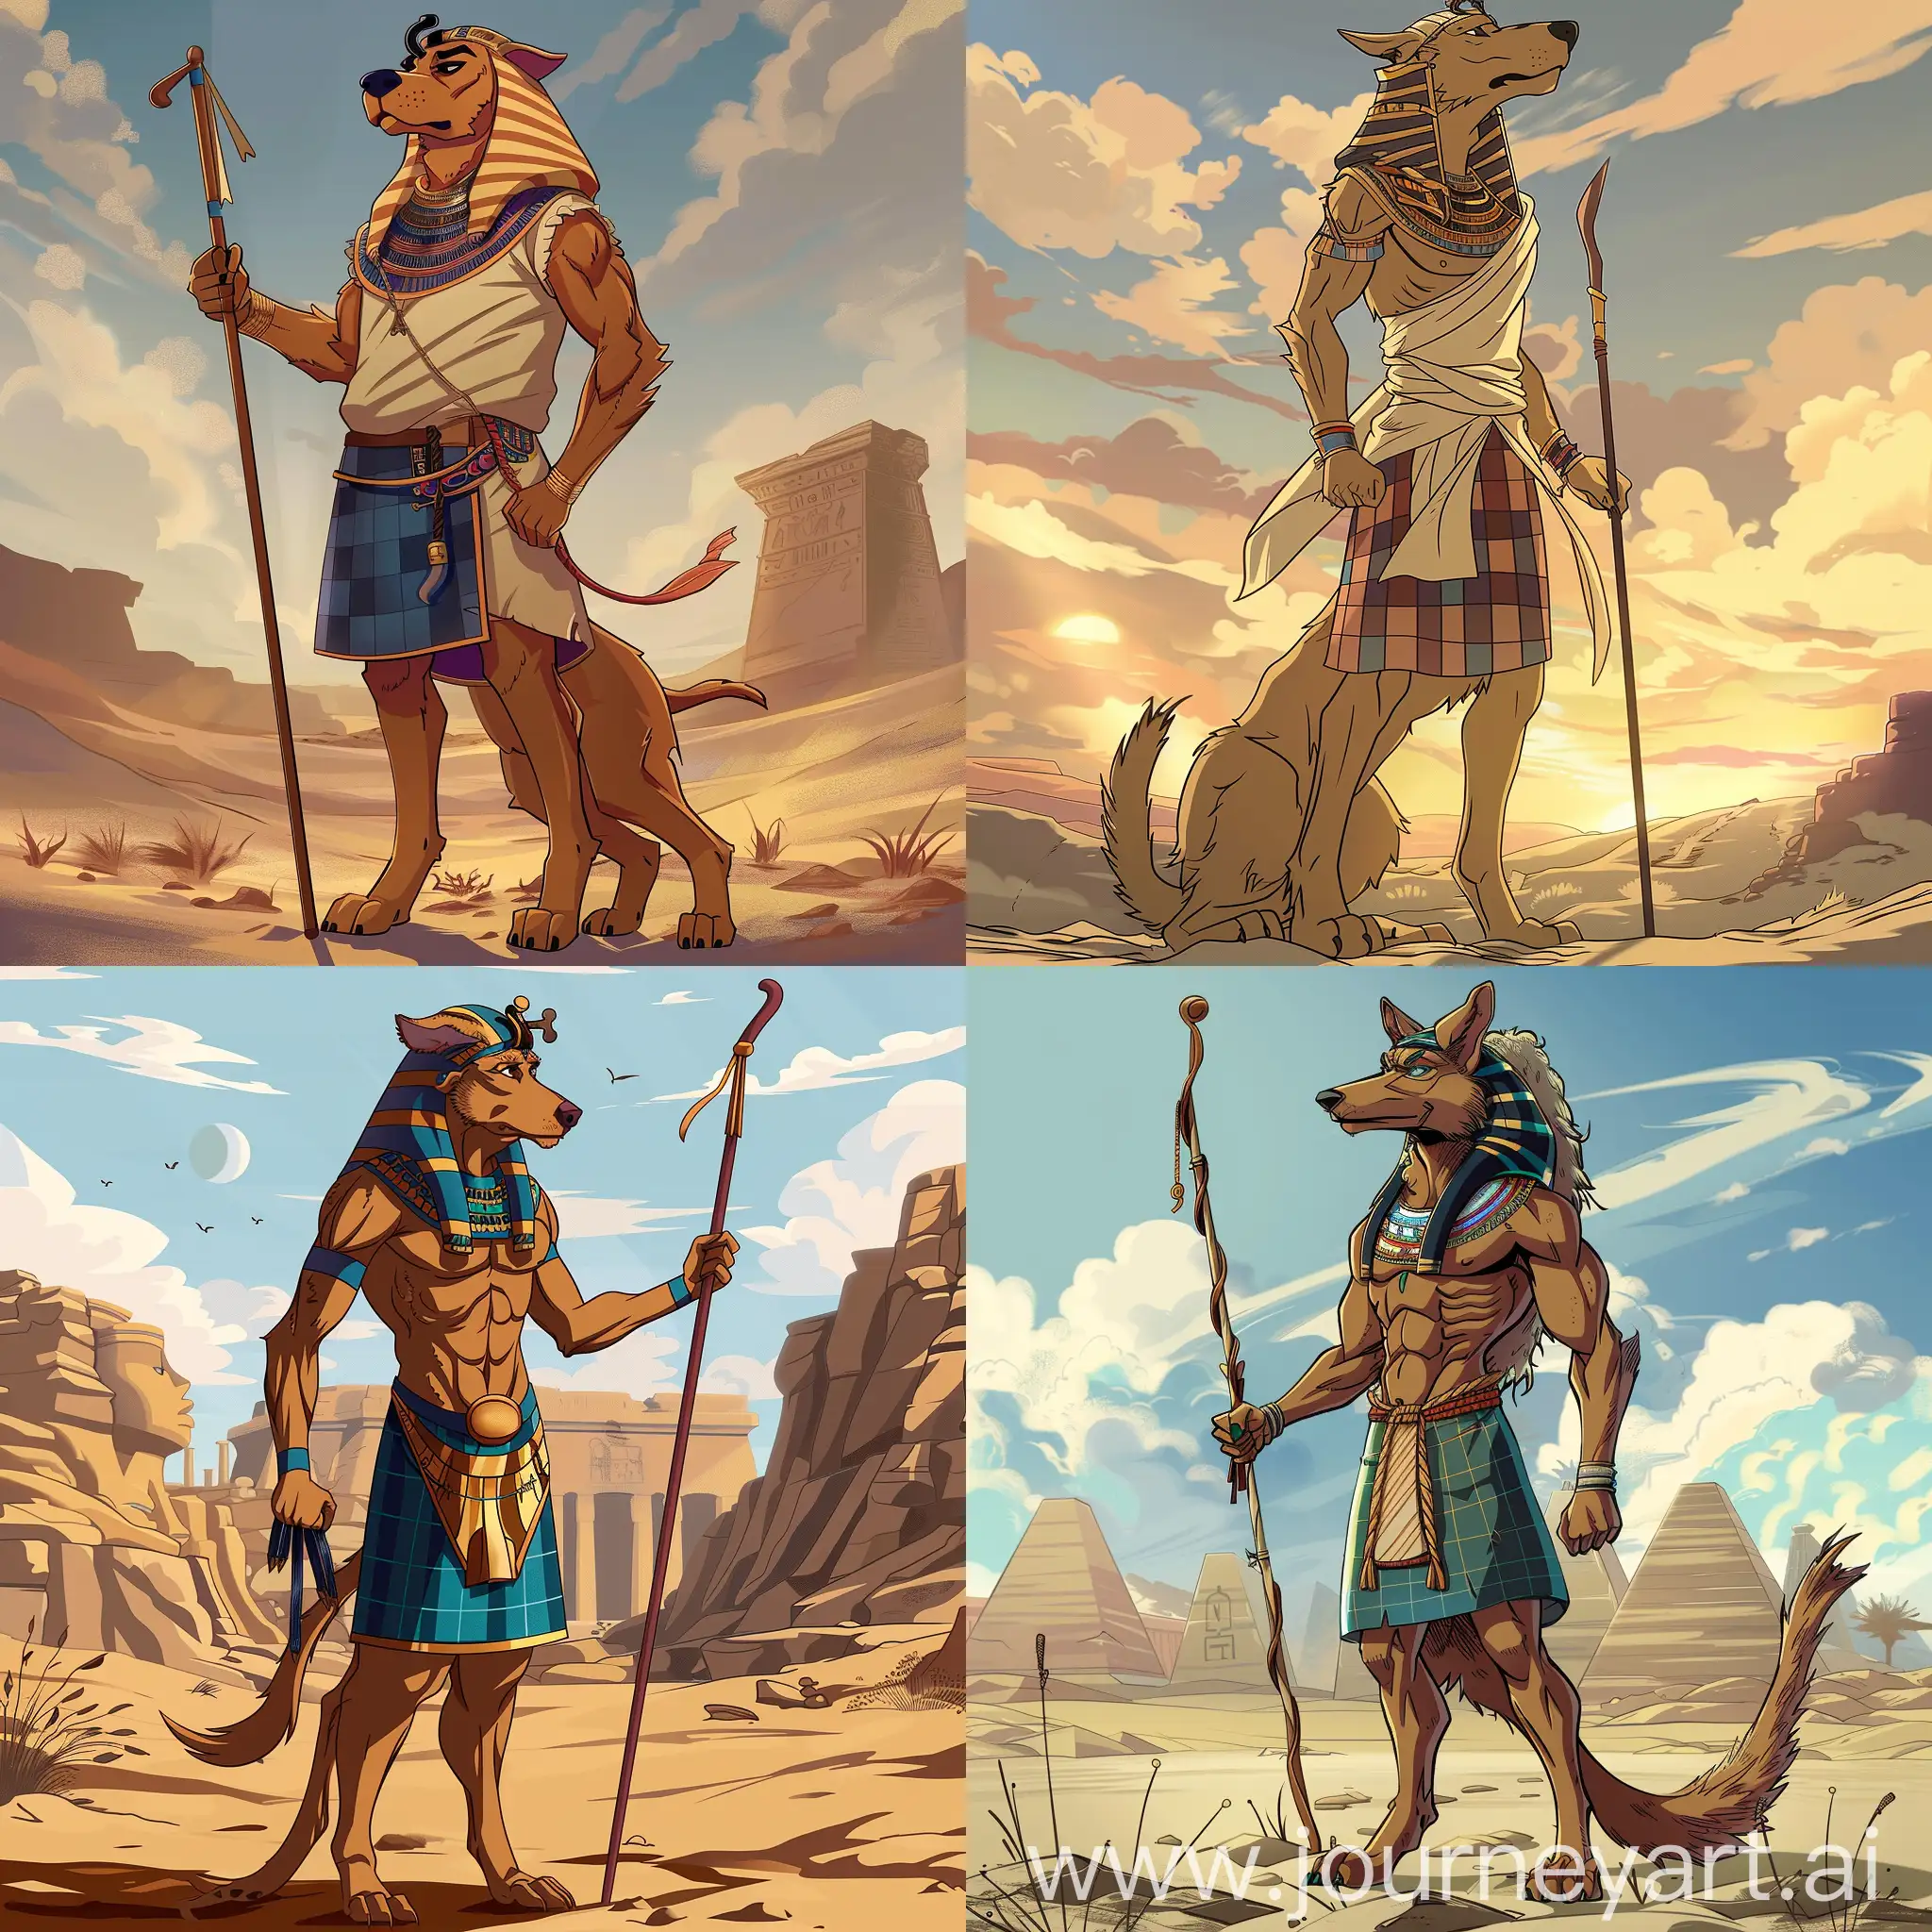 Epic-Anime-Illustration-Human-Shepherd-Dog-in-Pharaoh-Attire-with-Staff-in-Desert